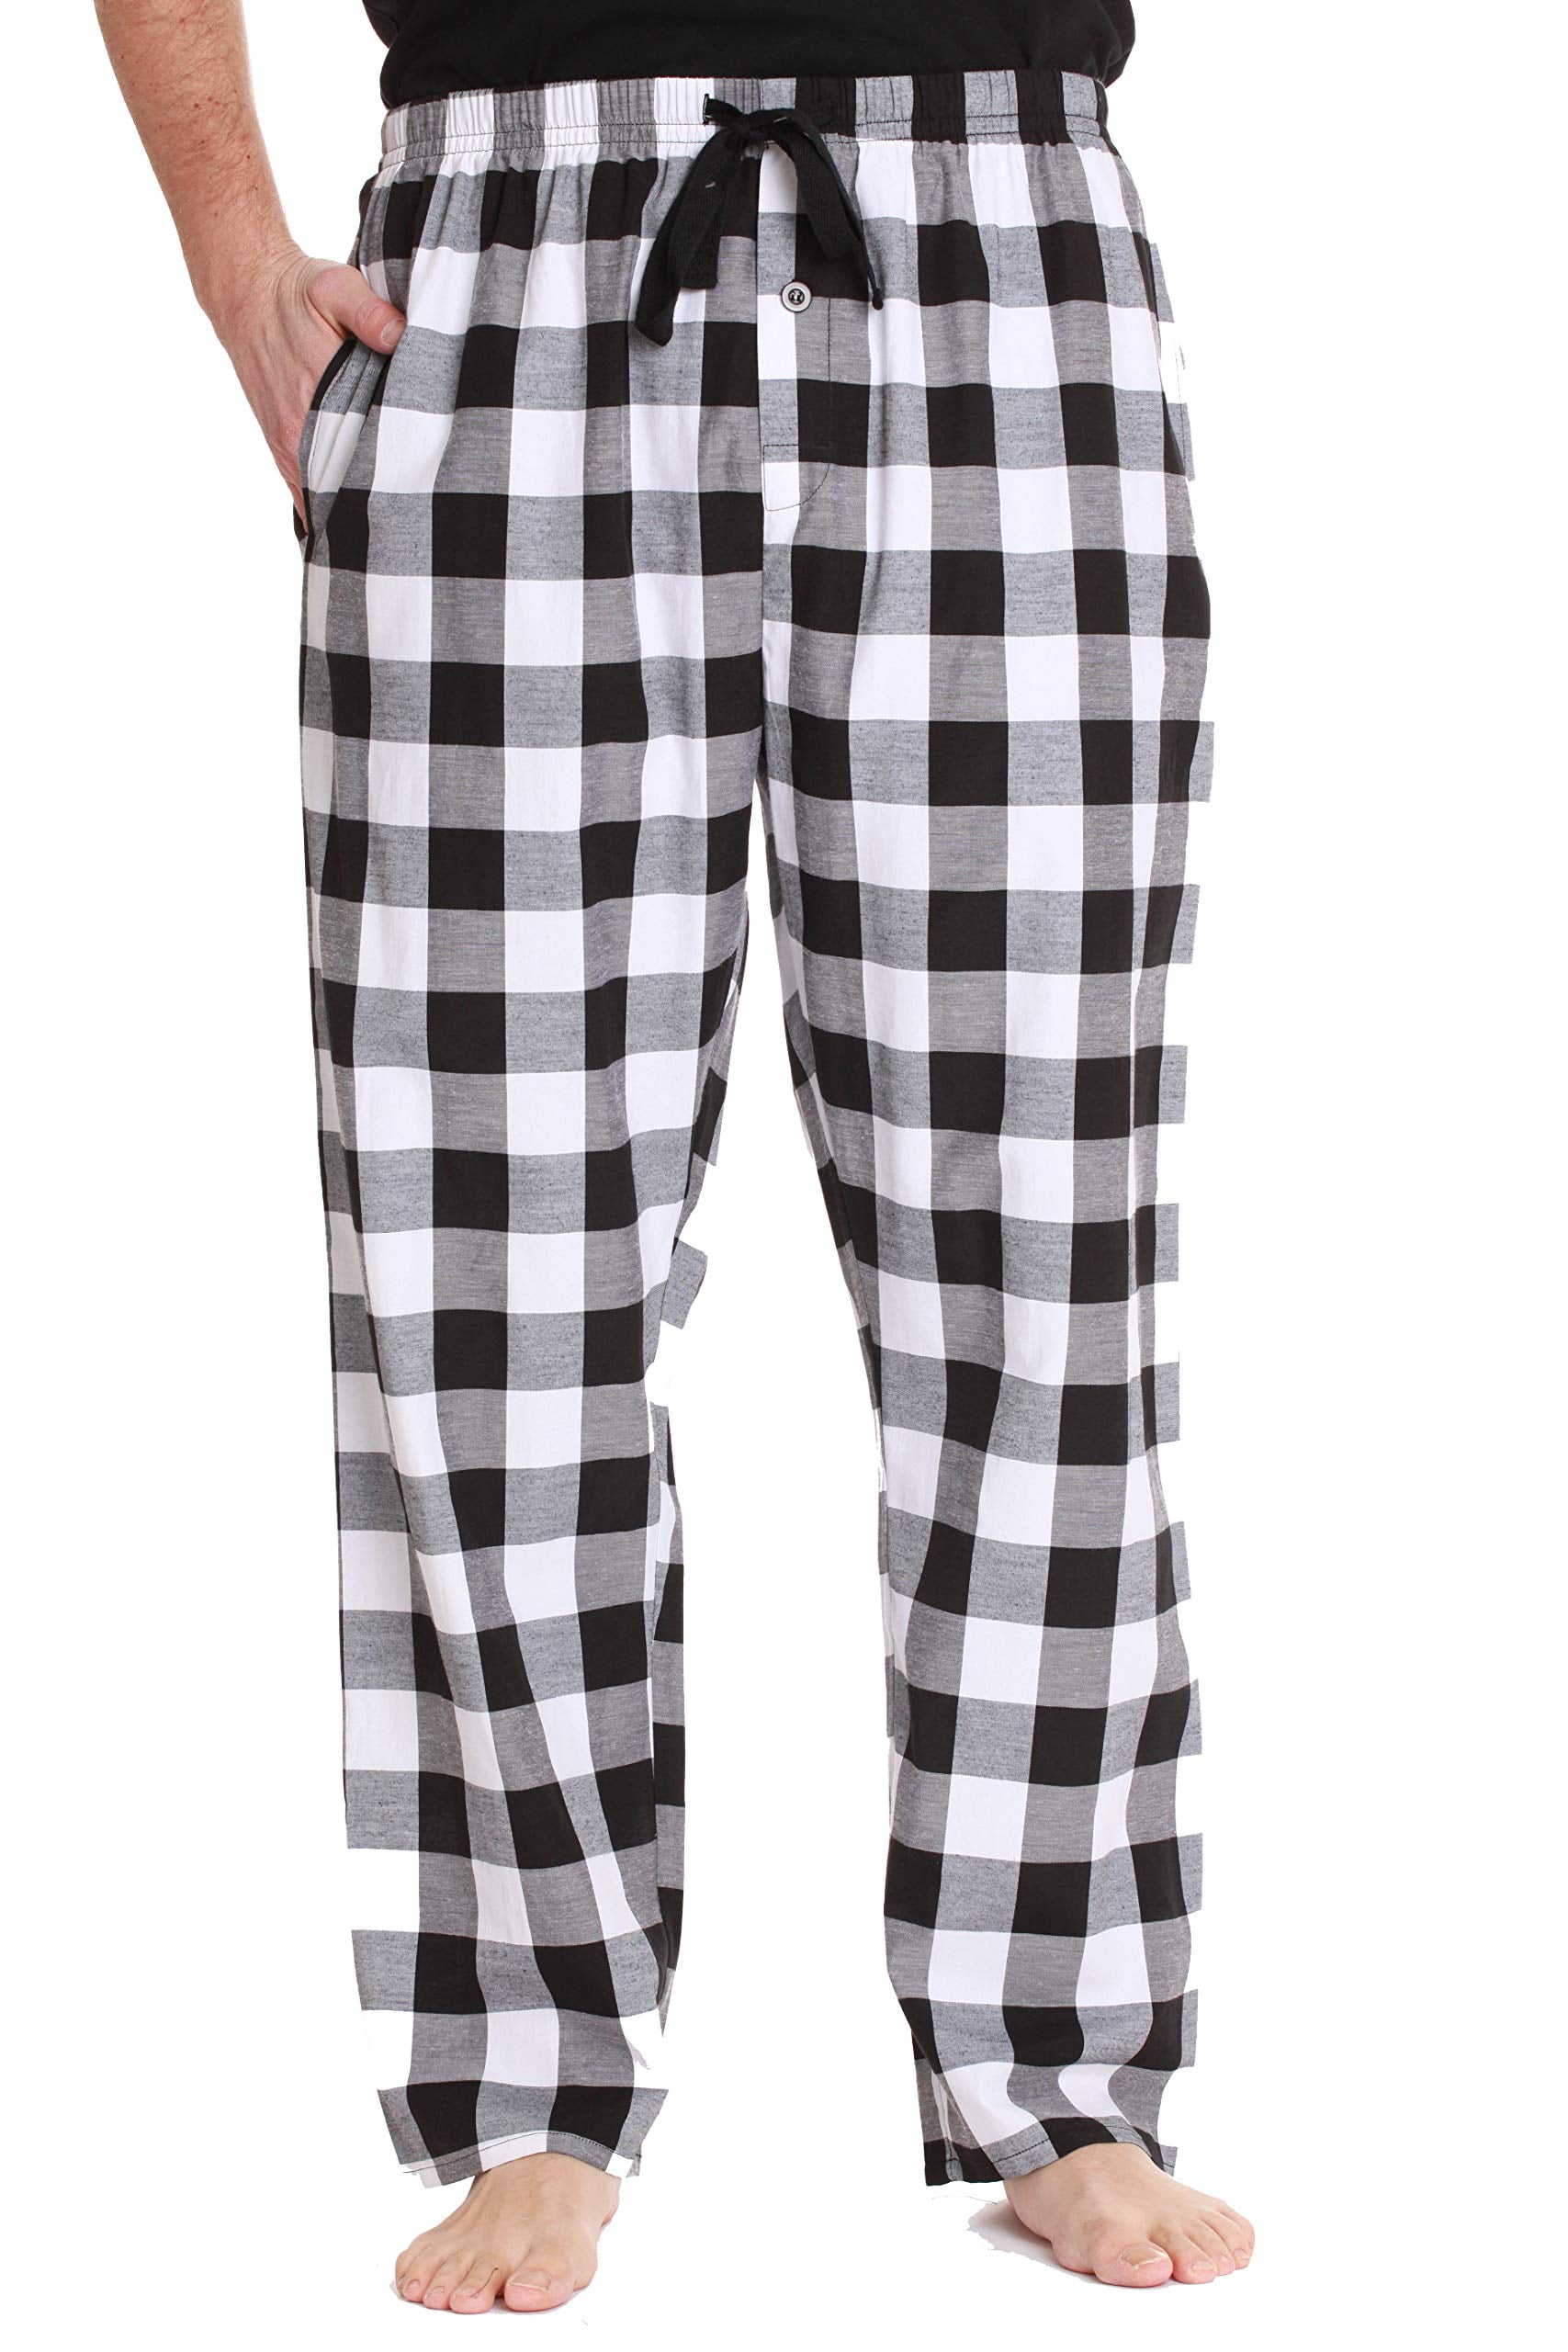 followme Mens Pajama Pants Pajamas for Men (Black White Buffalo Plaid,  Large) 